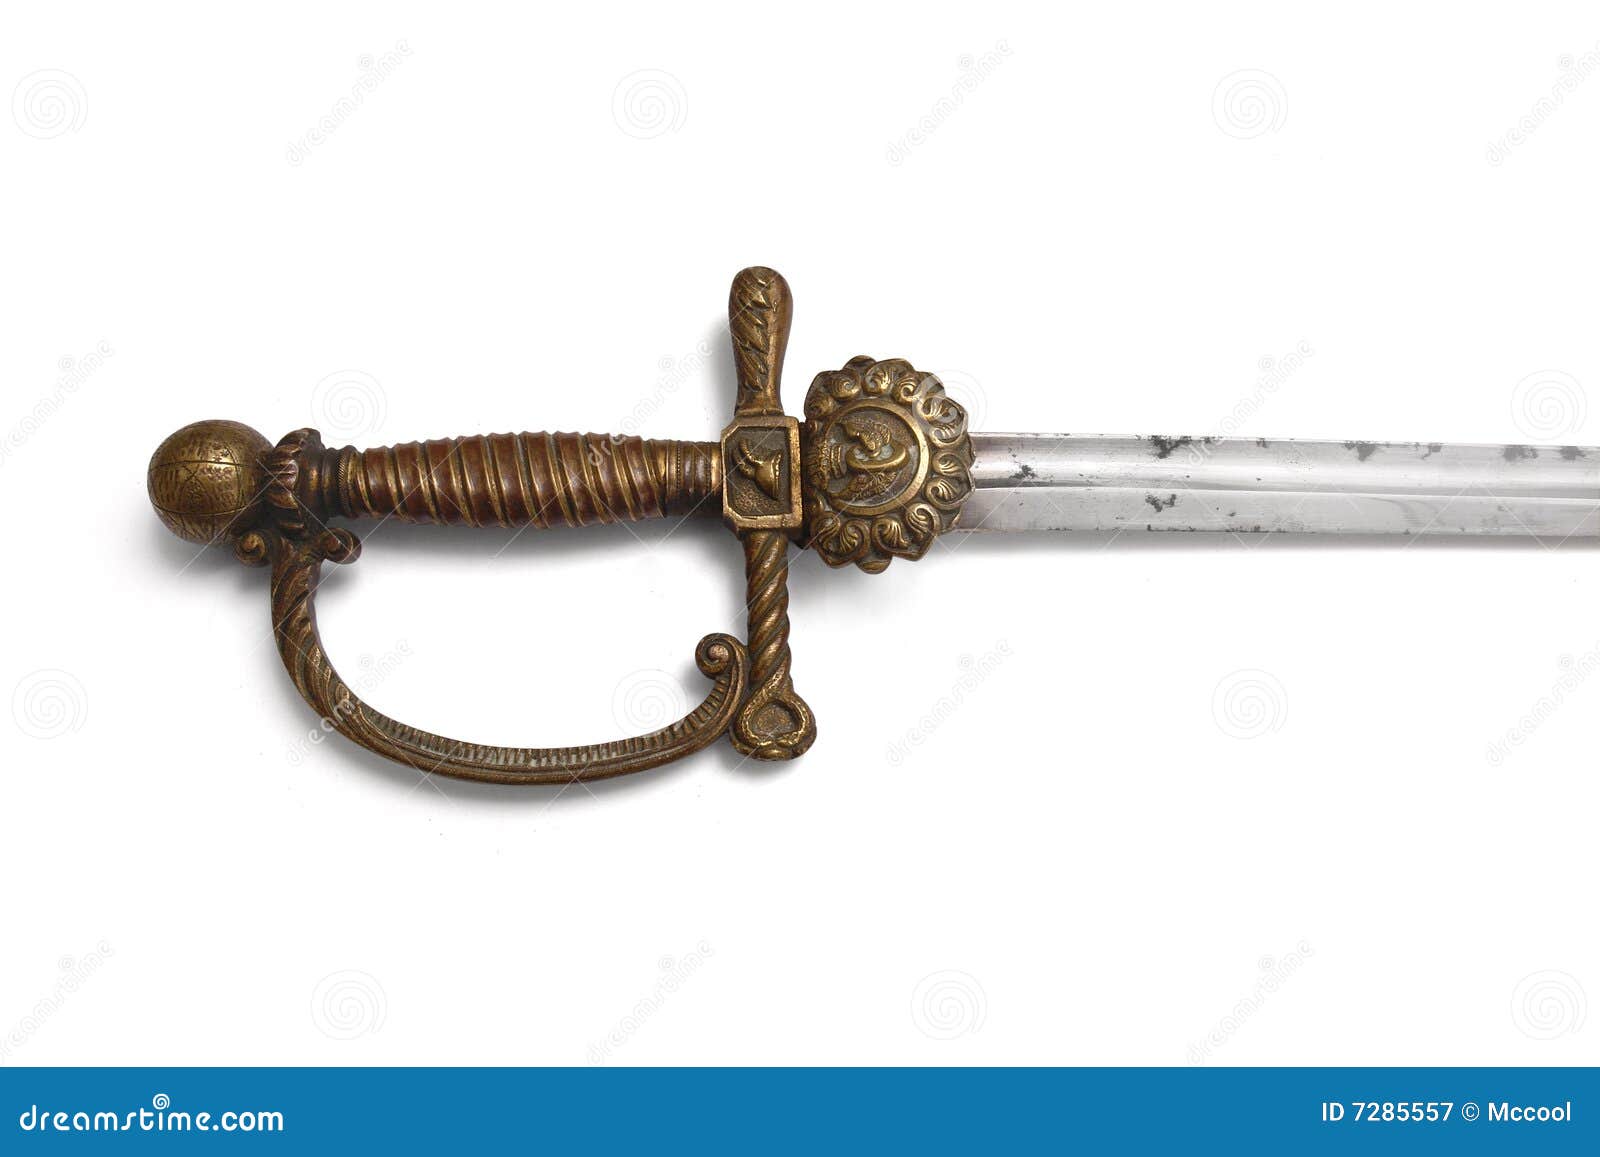 austria-hungary railway official sword